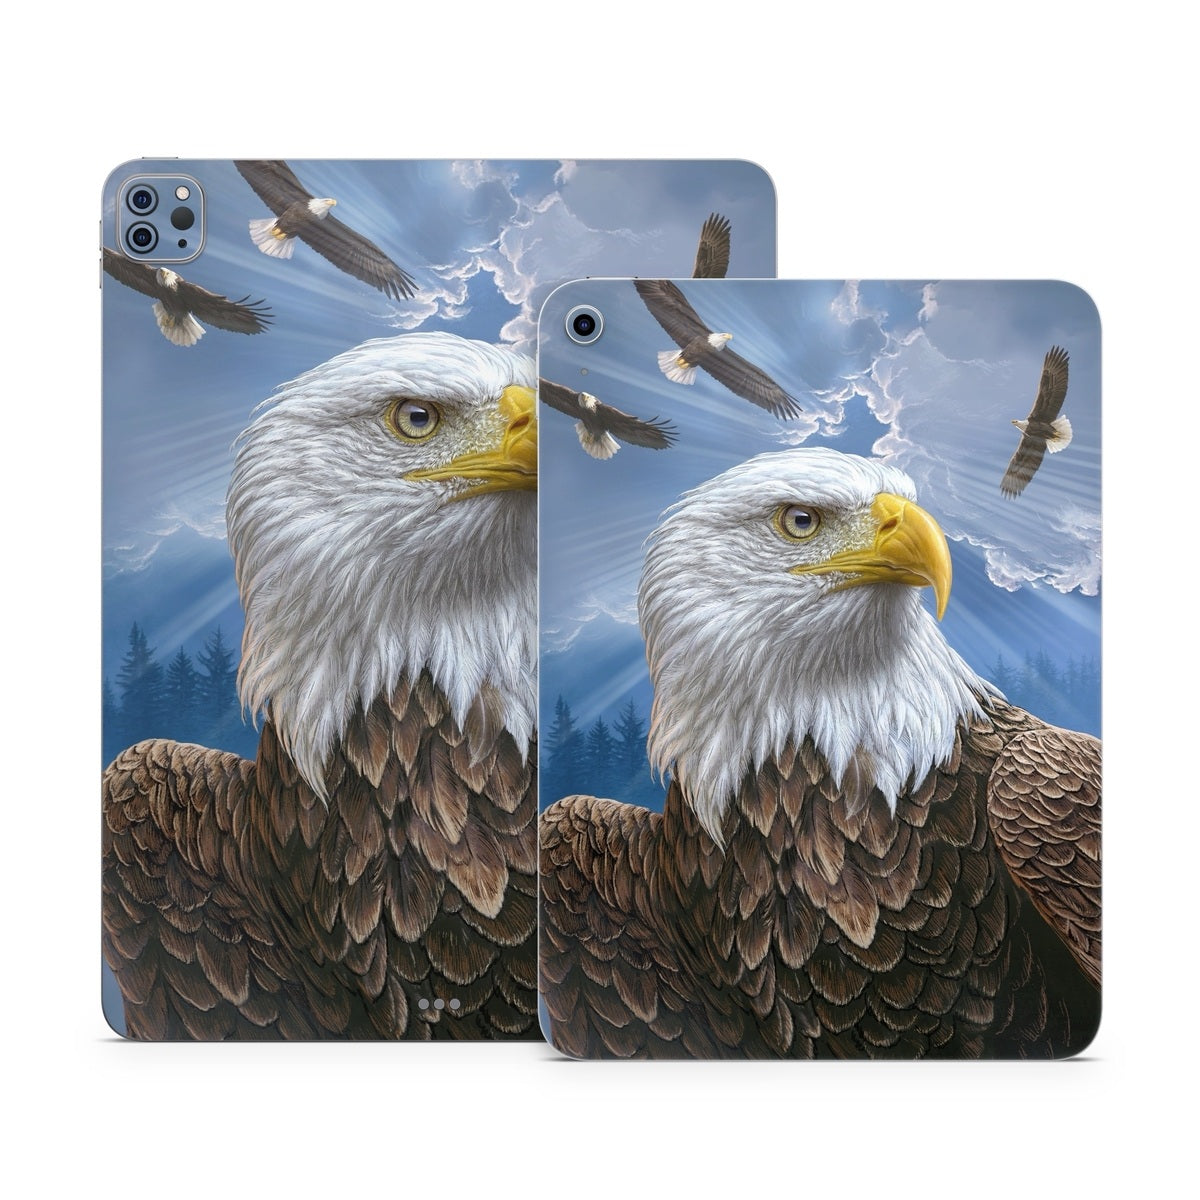 Guardian Eagle - Apple iPad Skin